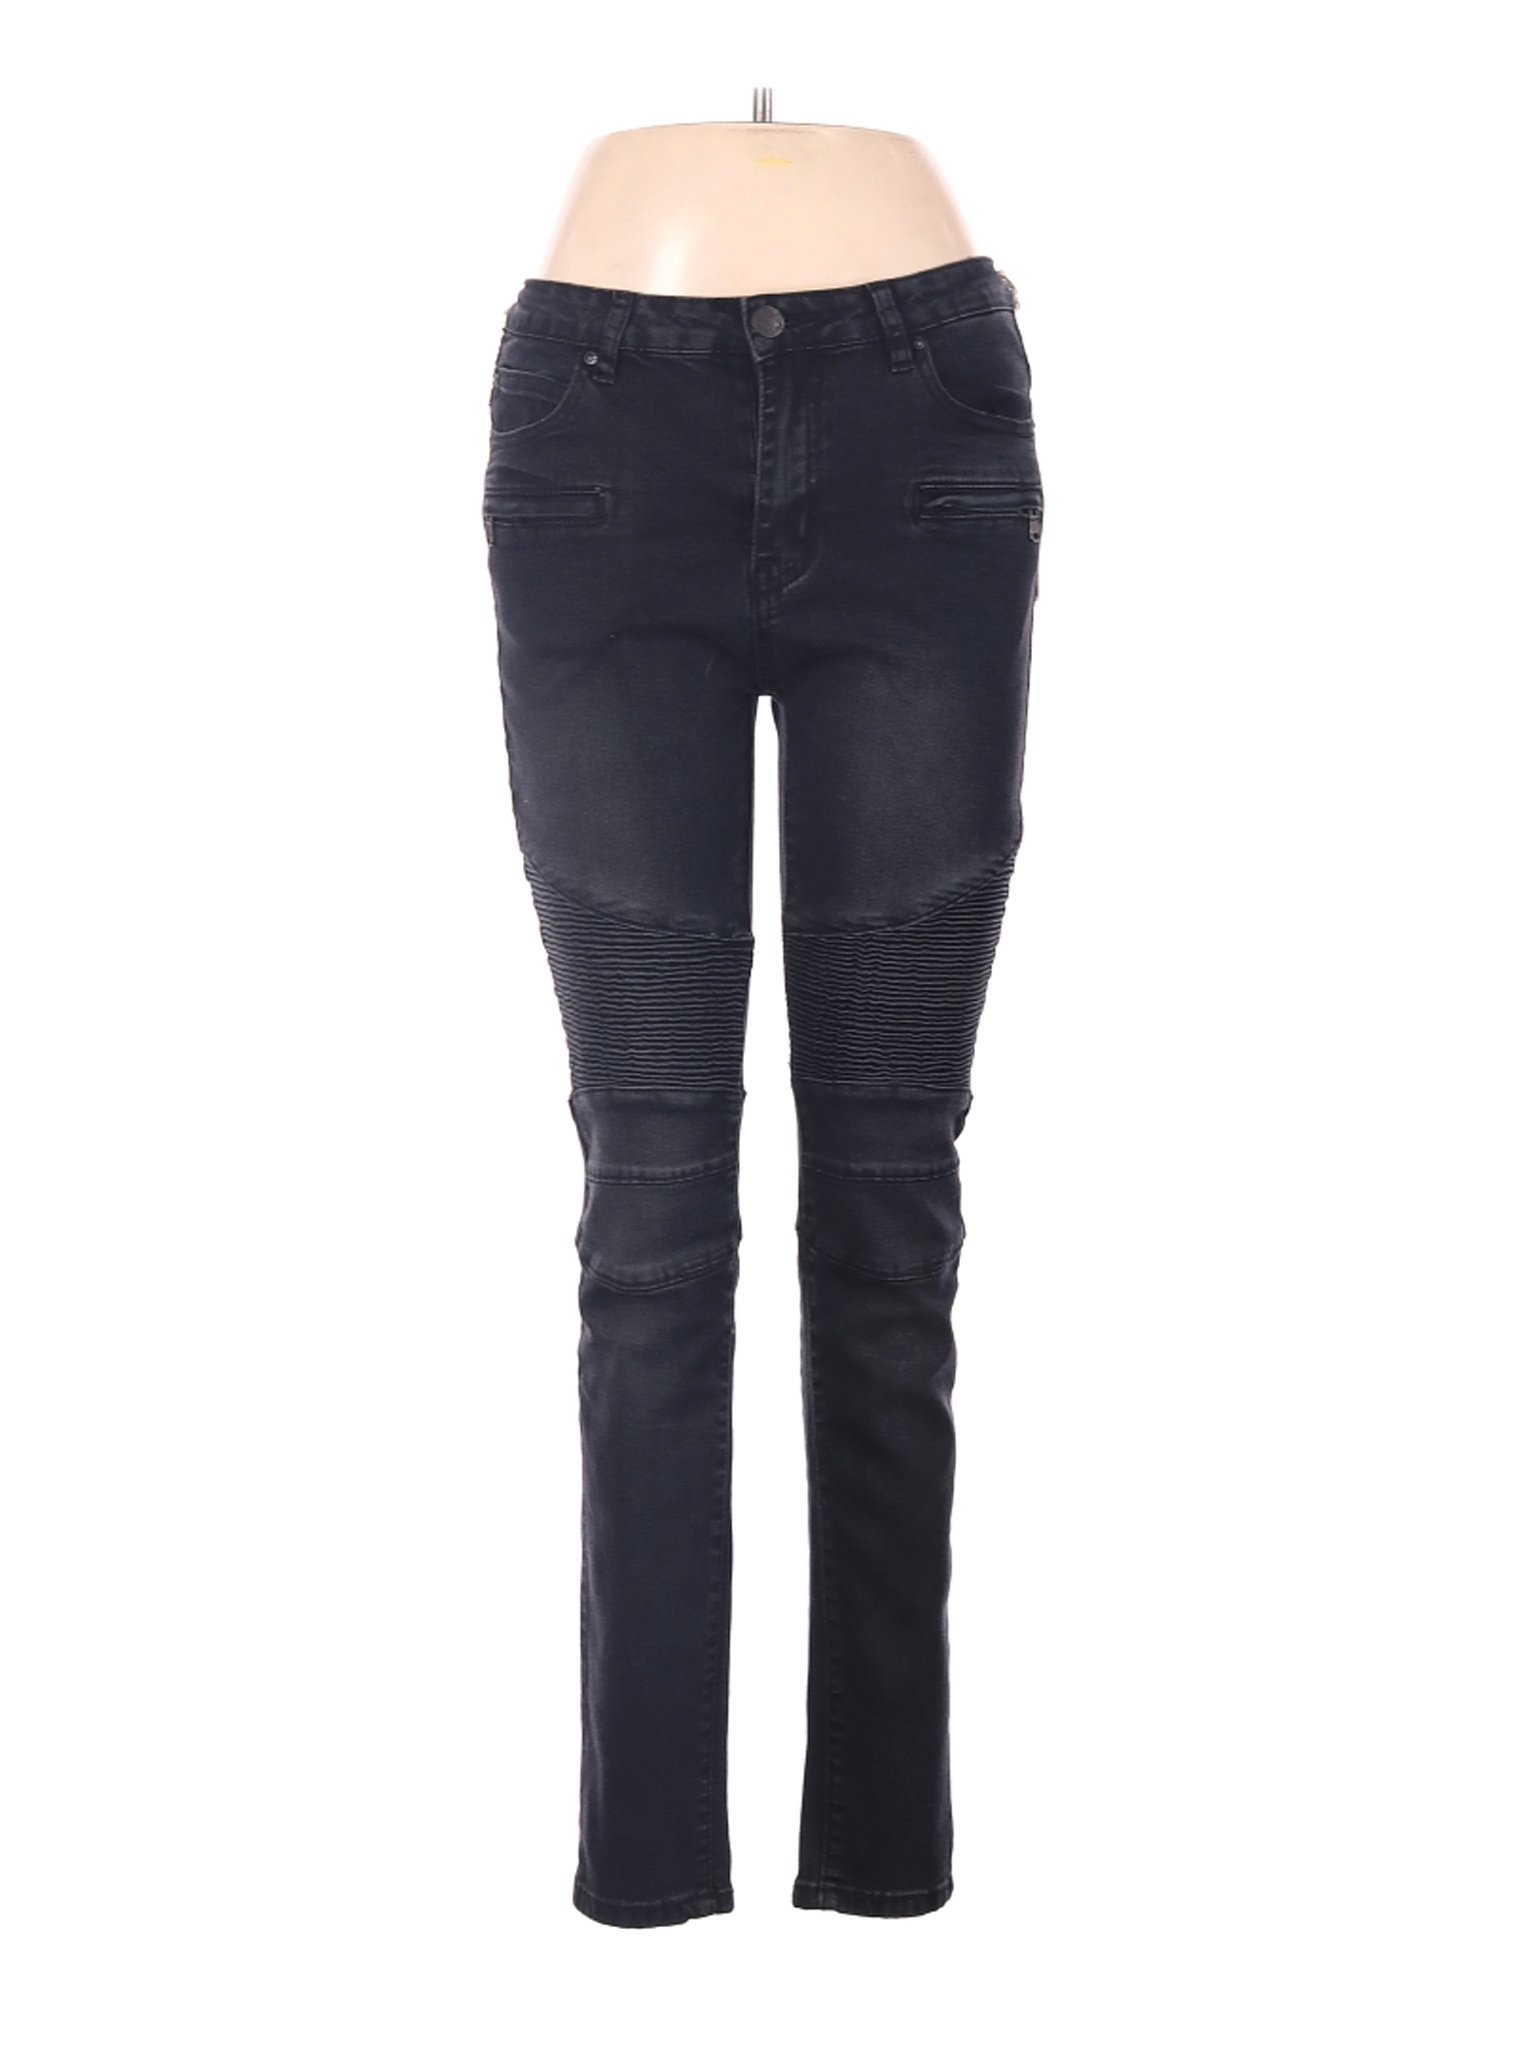 NWT American Bazi Women Blue Jeans 7 | eBay